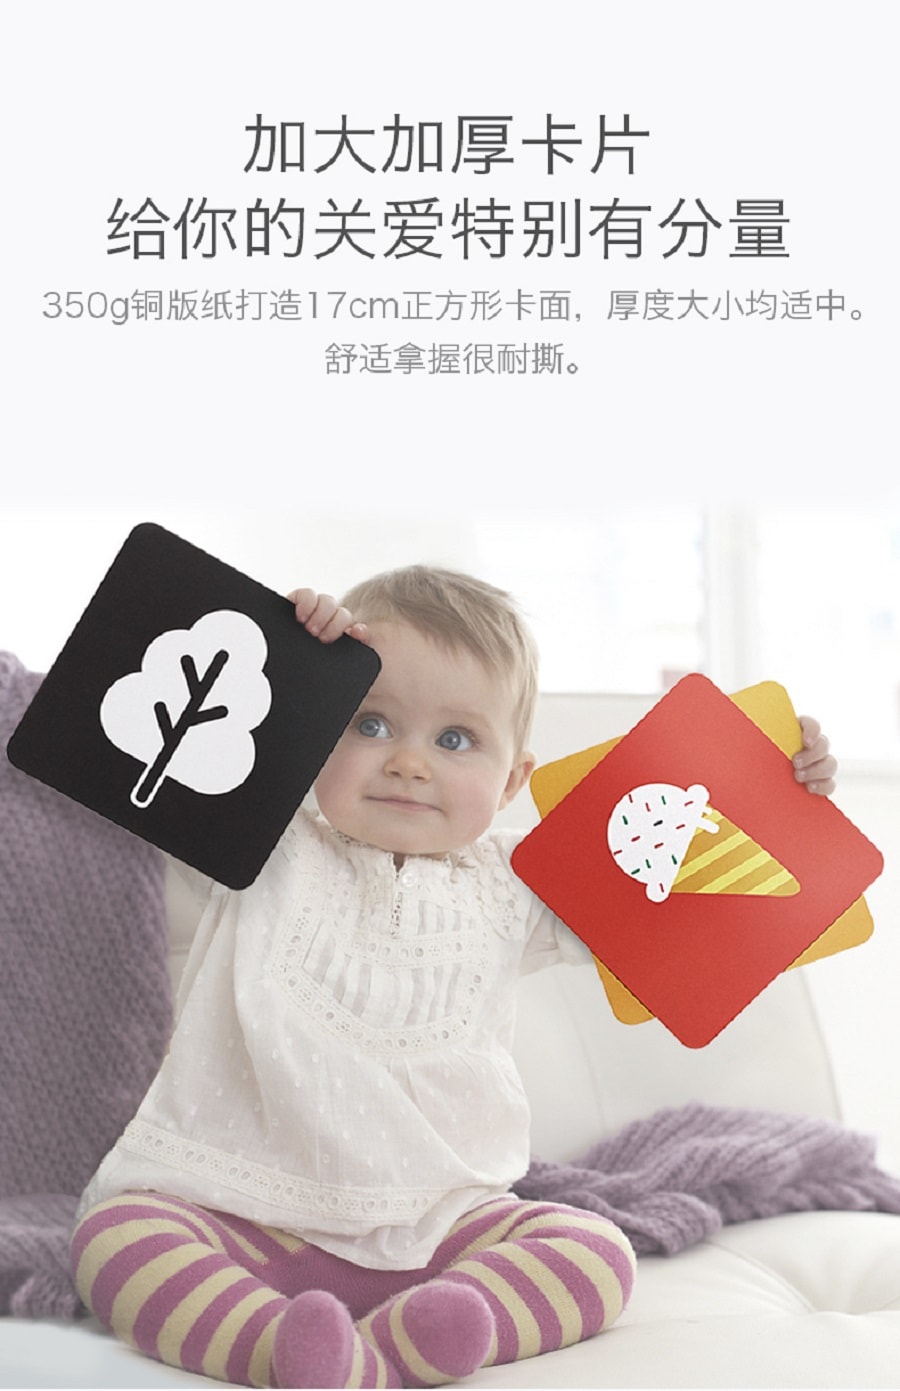 BC BABYCARE 黑白視覺激發卡 新生嬰兒玩具 初生寶寶追視閃卡彩色 四盒裝